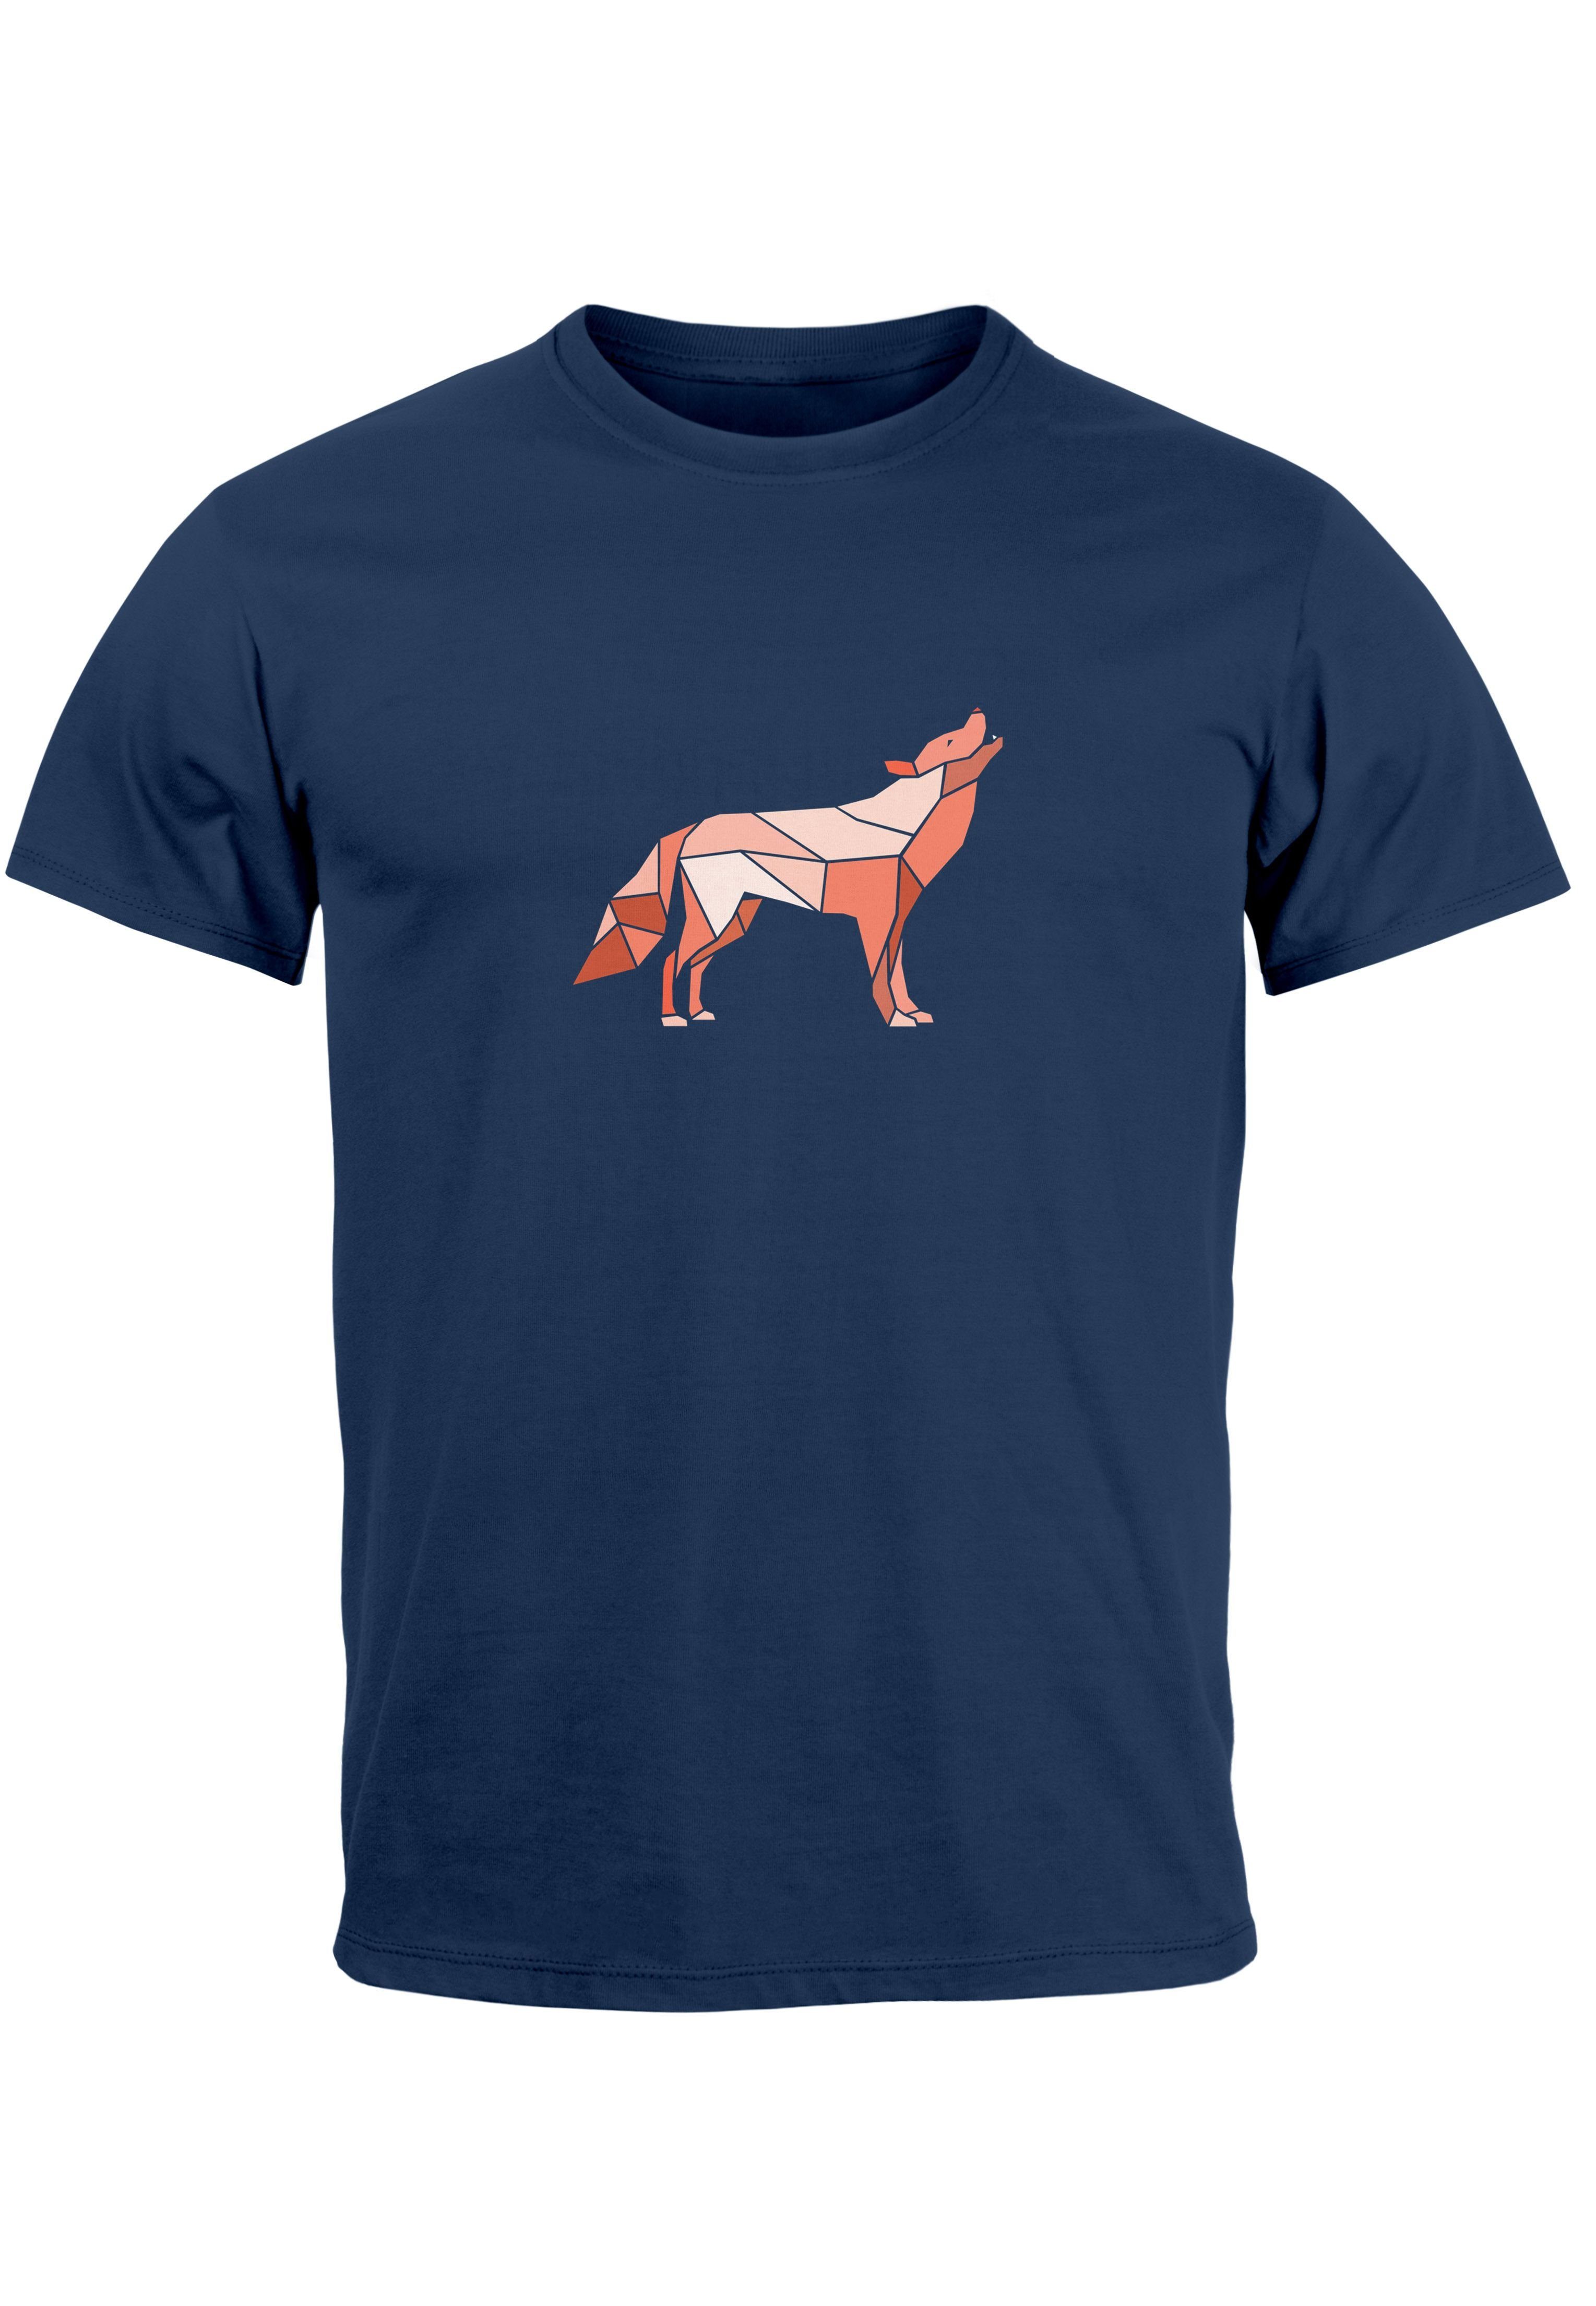 Neverless Print-Shirt Herren T-Shirt Bedruckt Polygon Grafik Wolf Outdoor Fashion Tiermotiv mit Print navy